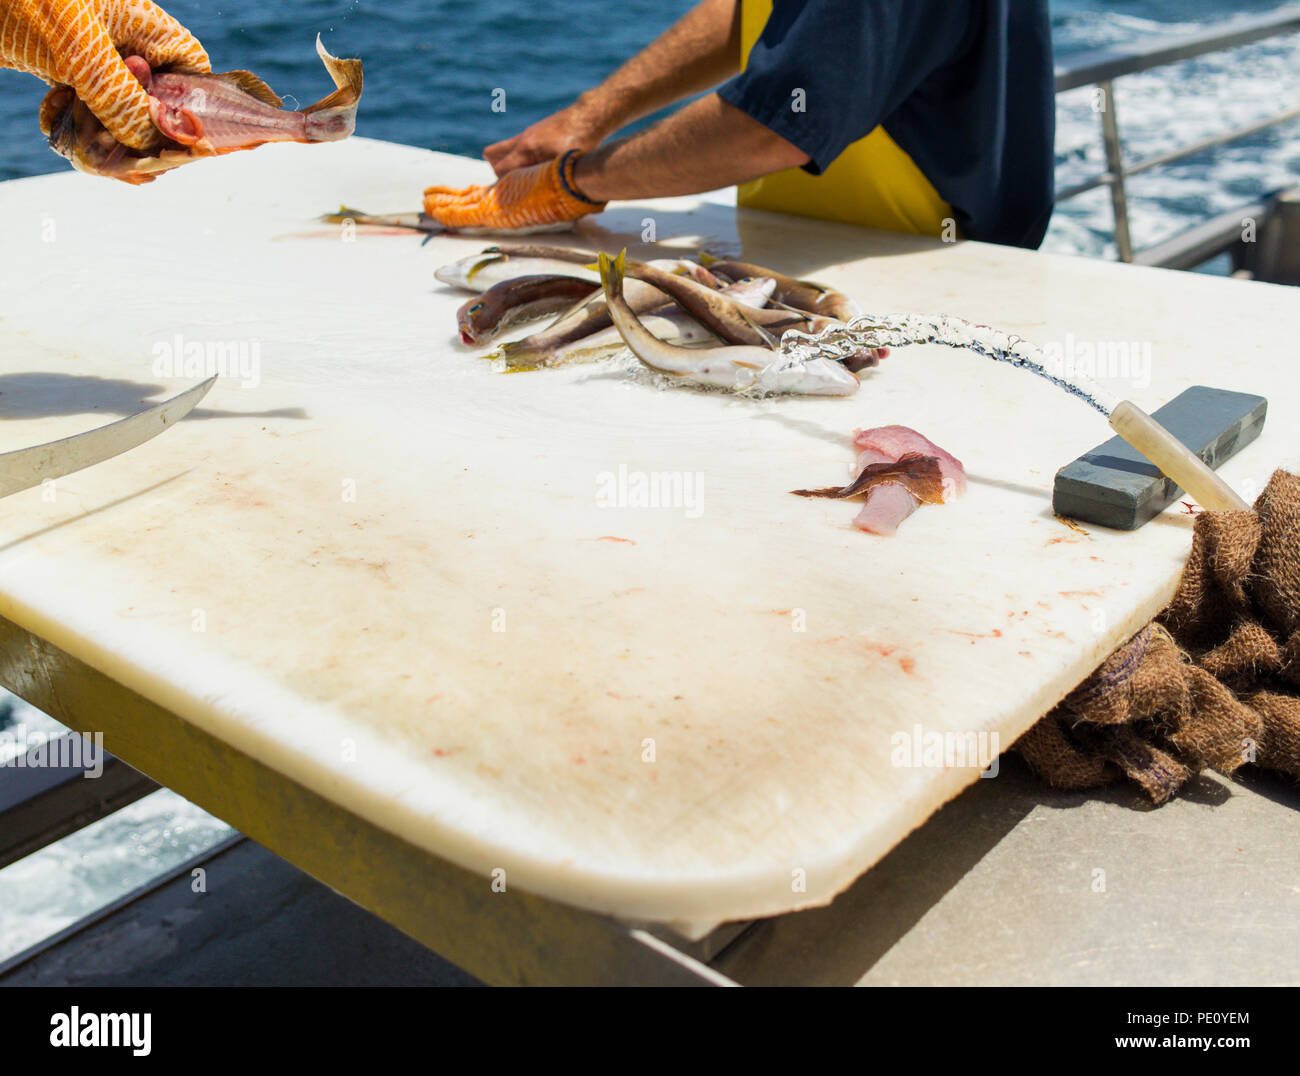 Fisherman holding sliced fish over cutting board. Fisherman guys on ship deck preparing fish overlooking sea. Stock Photo